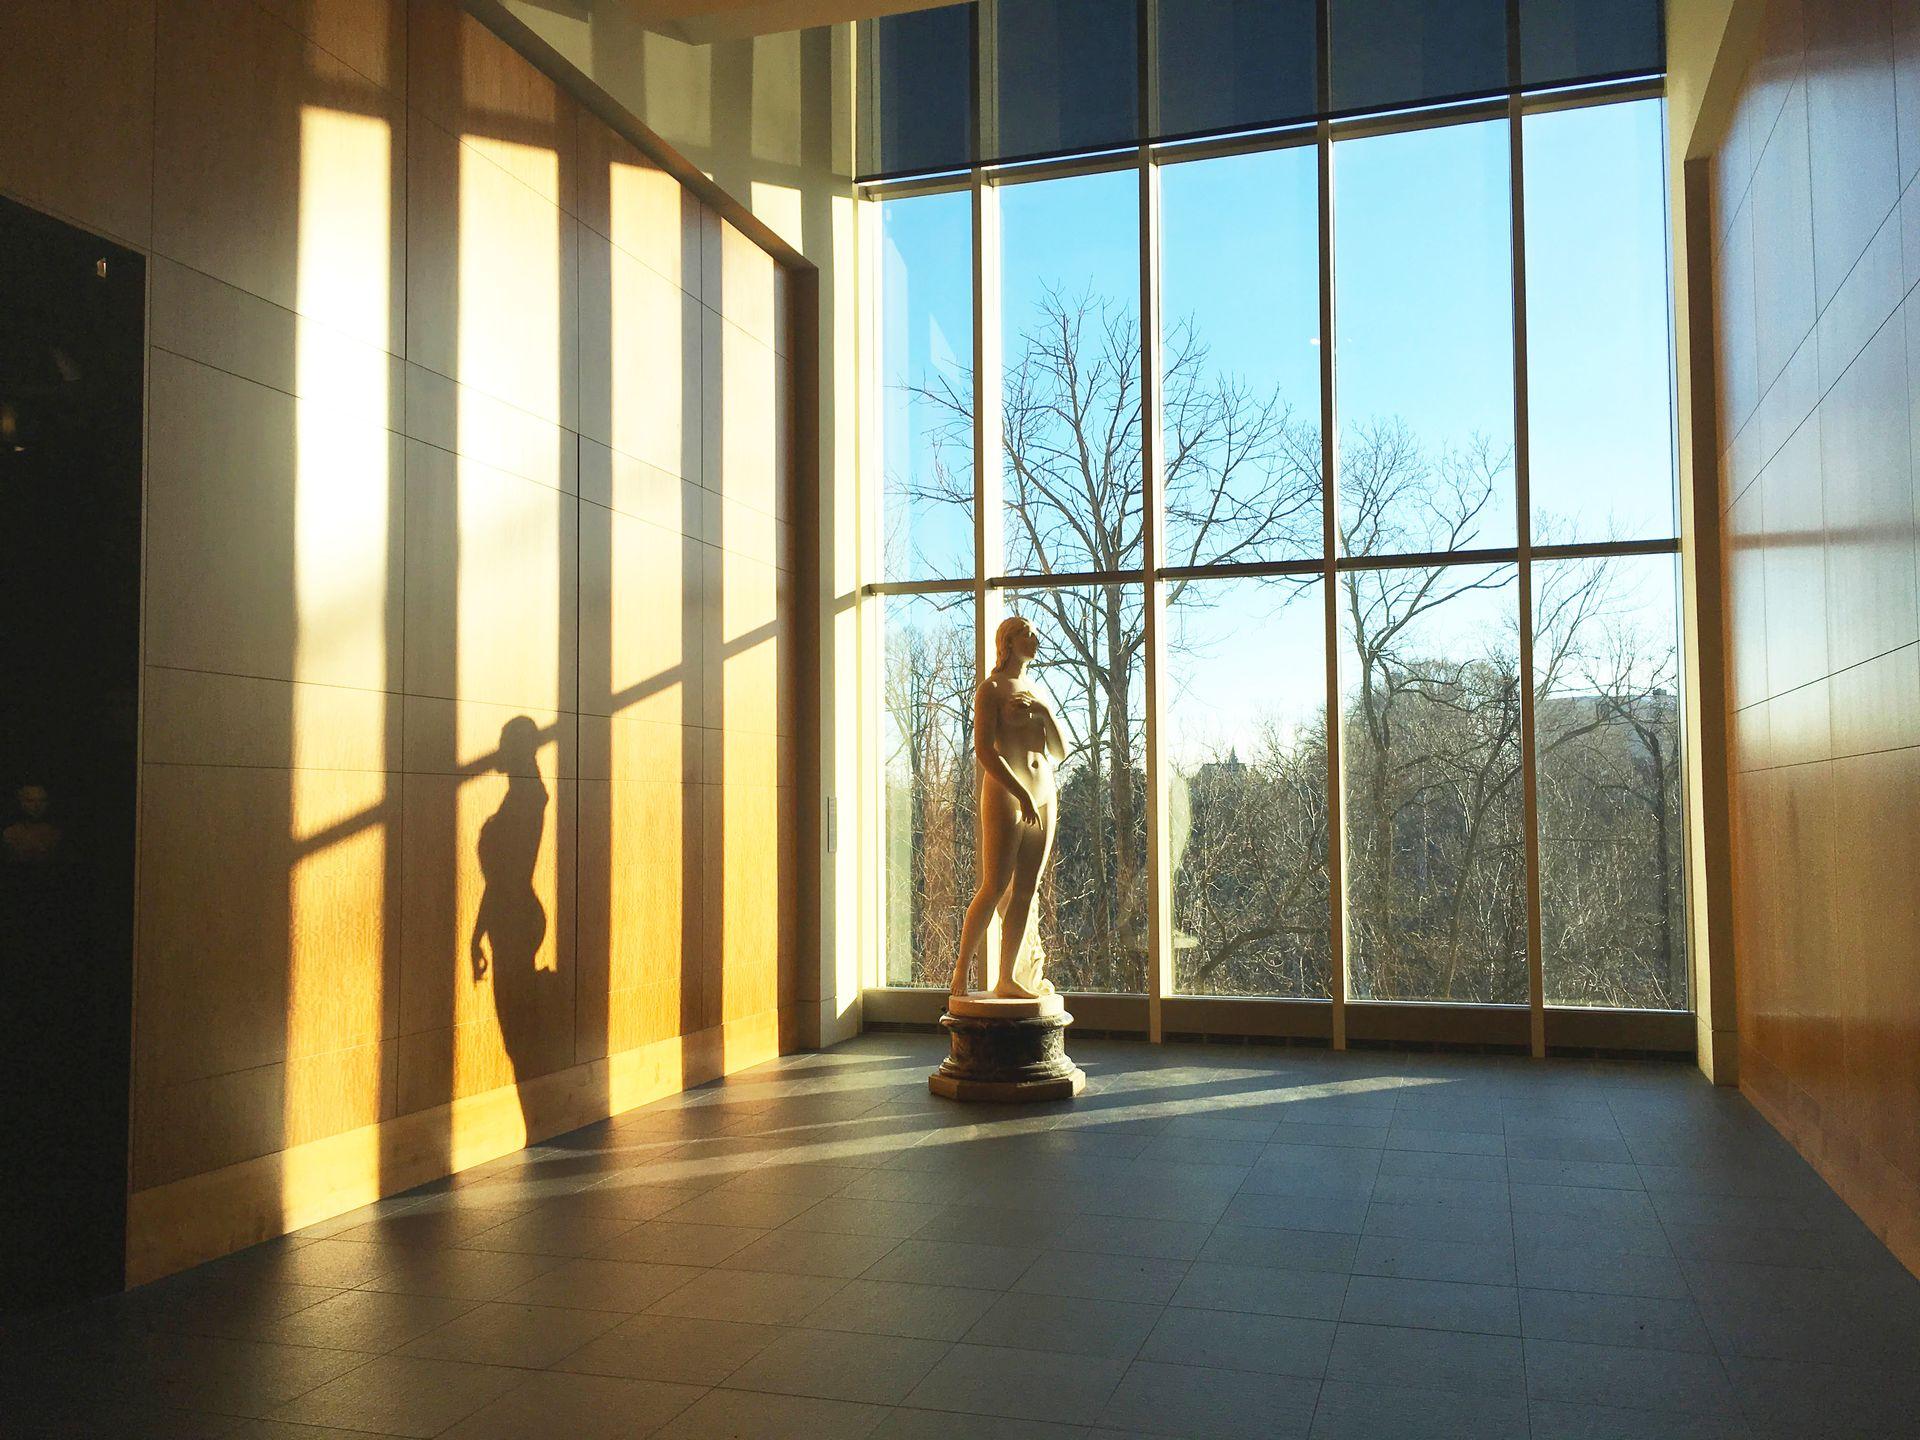 A sculpture in front of a window at the Cincinnati Art Museum